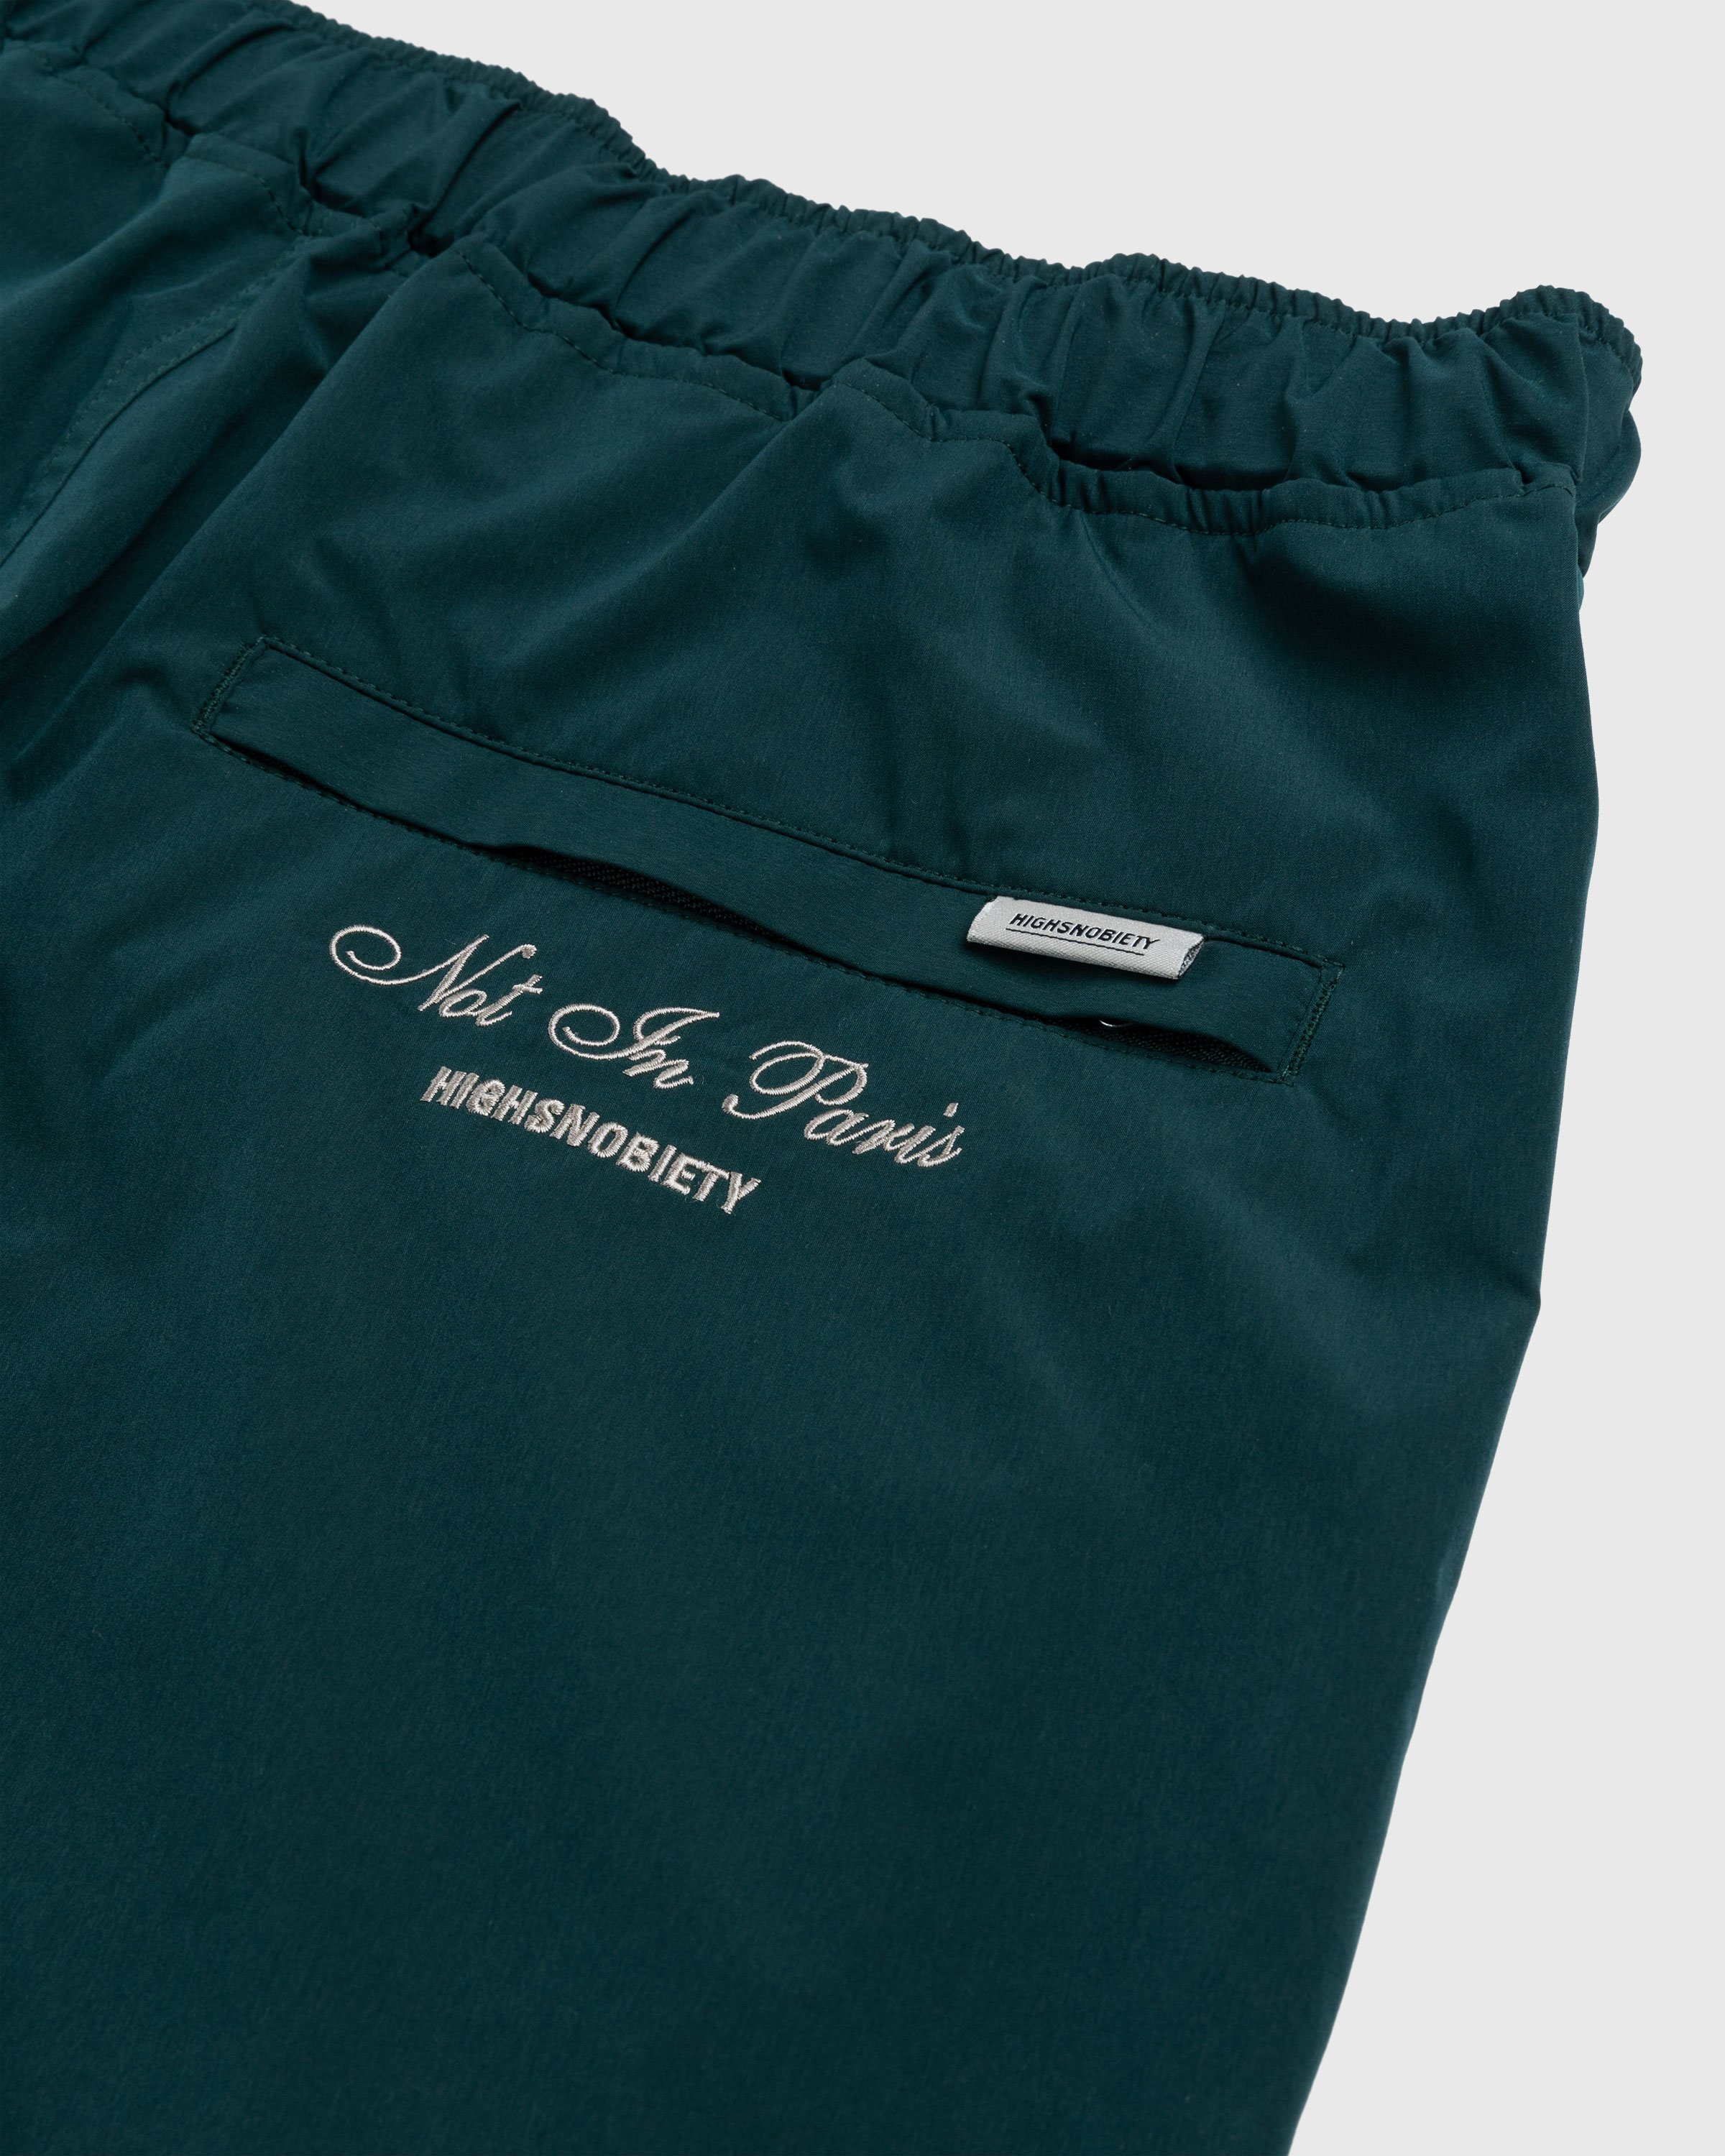 Highsnobiety - Not in Paris 5 Nylon Shorts - Clothing - Green - Image 6